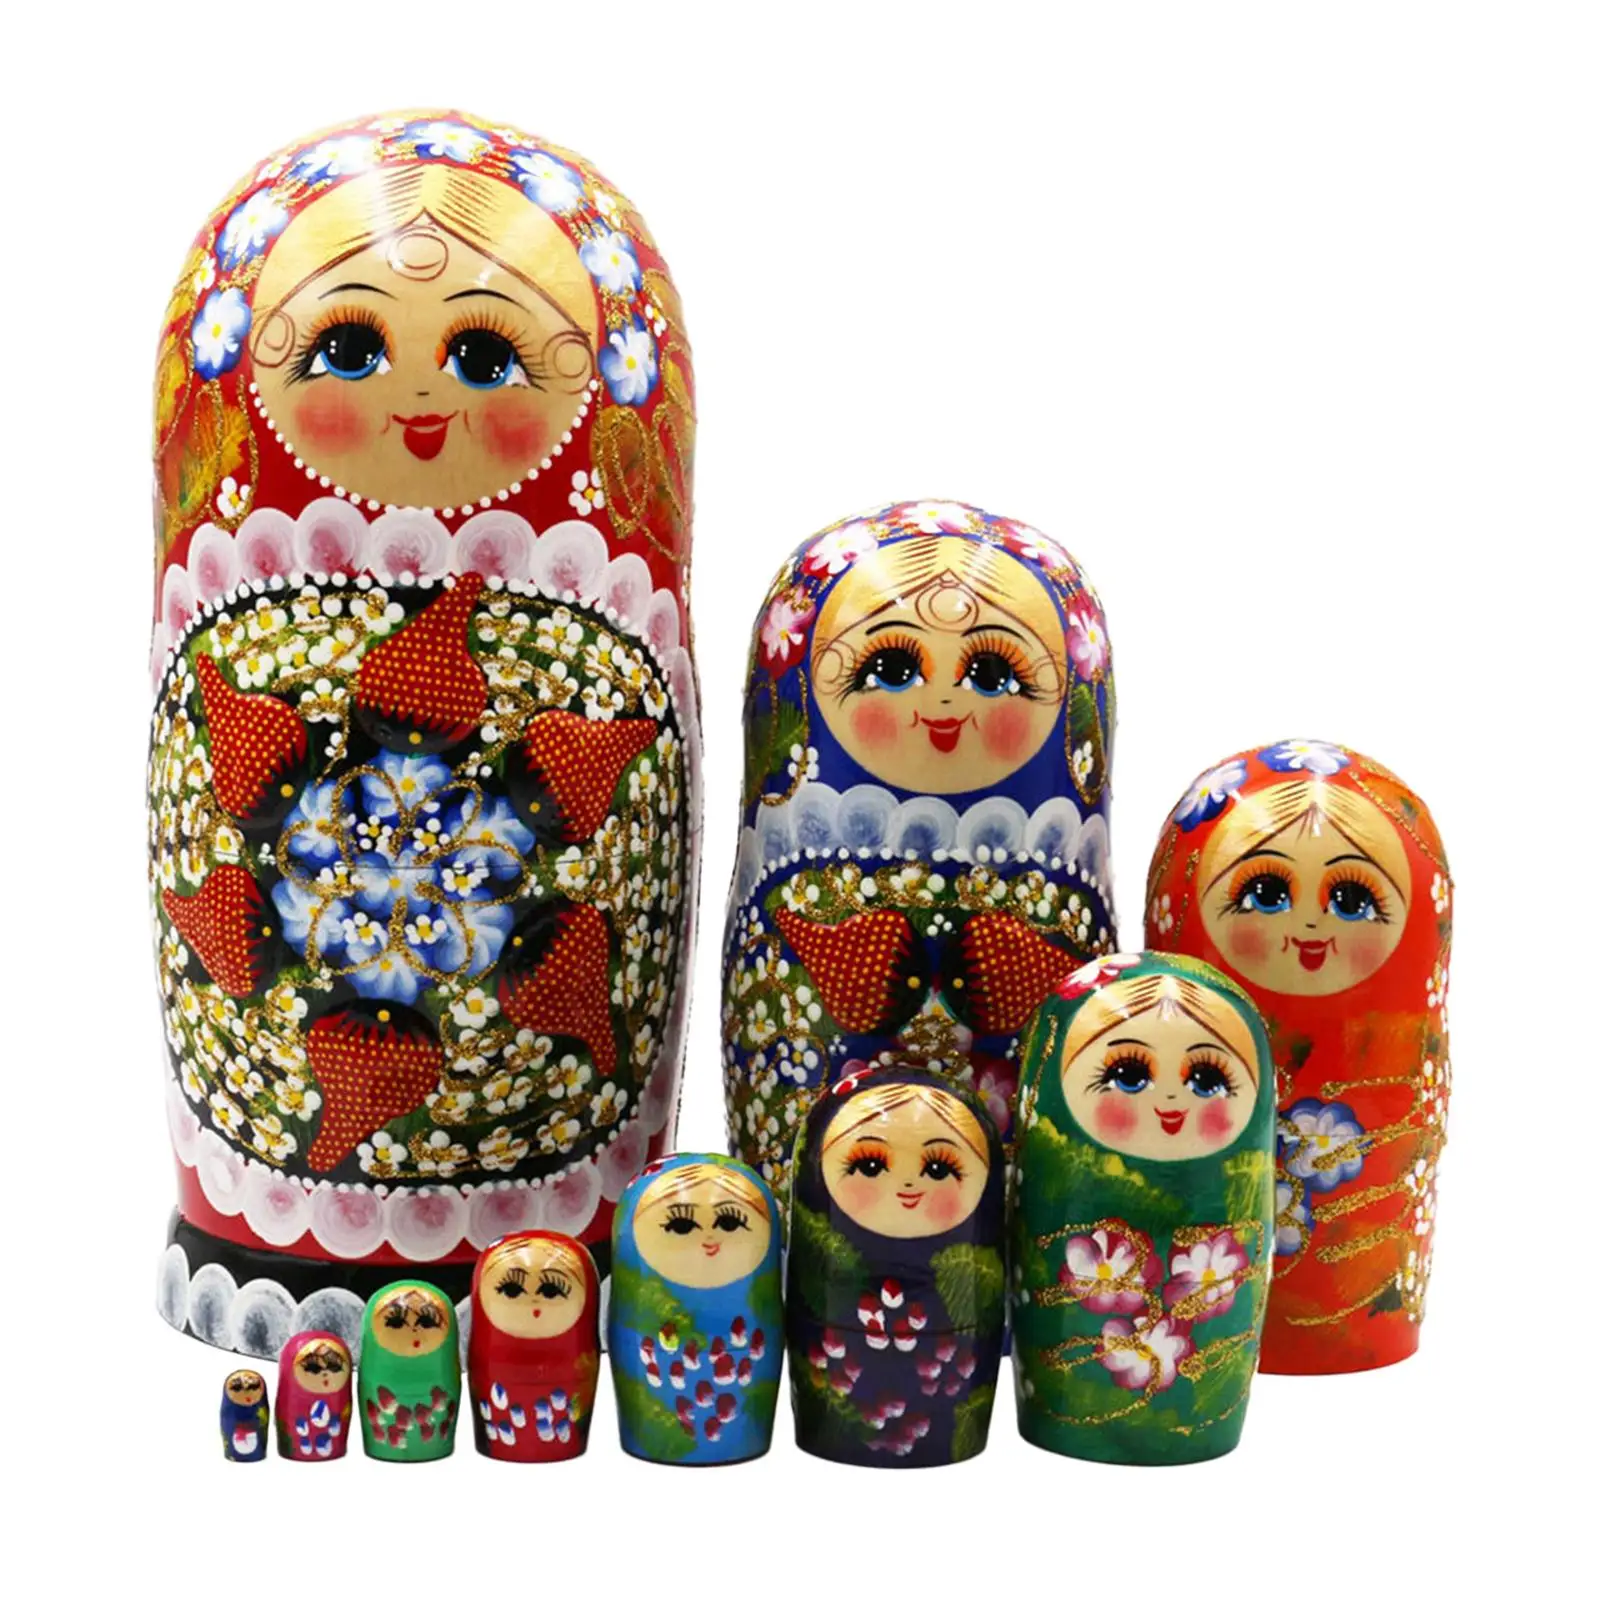 10x Matryoshka Shelf Cute Collectible Wooden Russian Nesting Doll Decoration